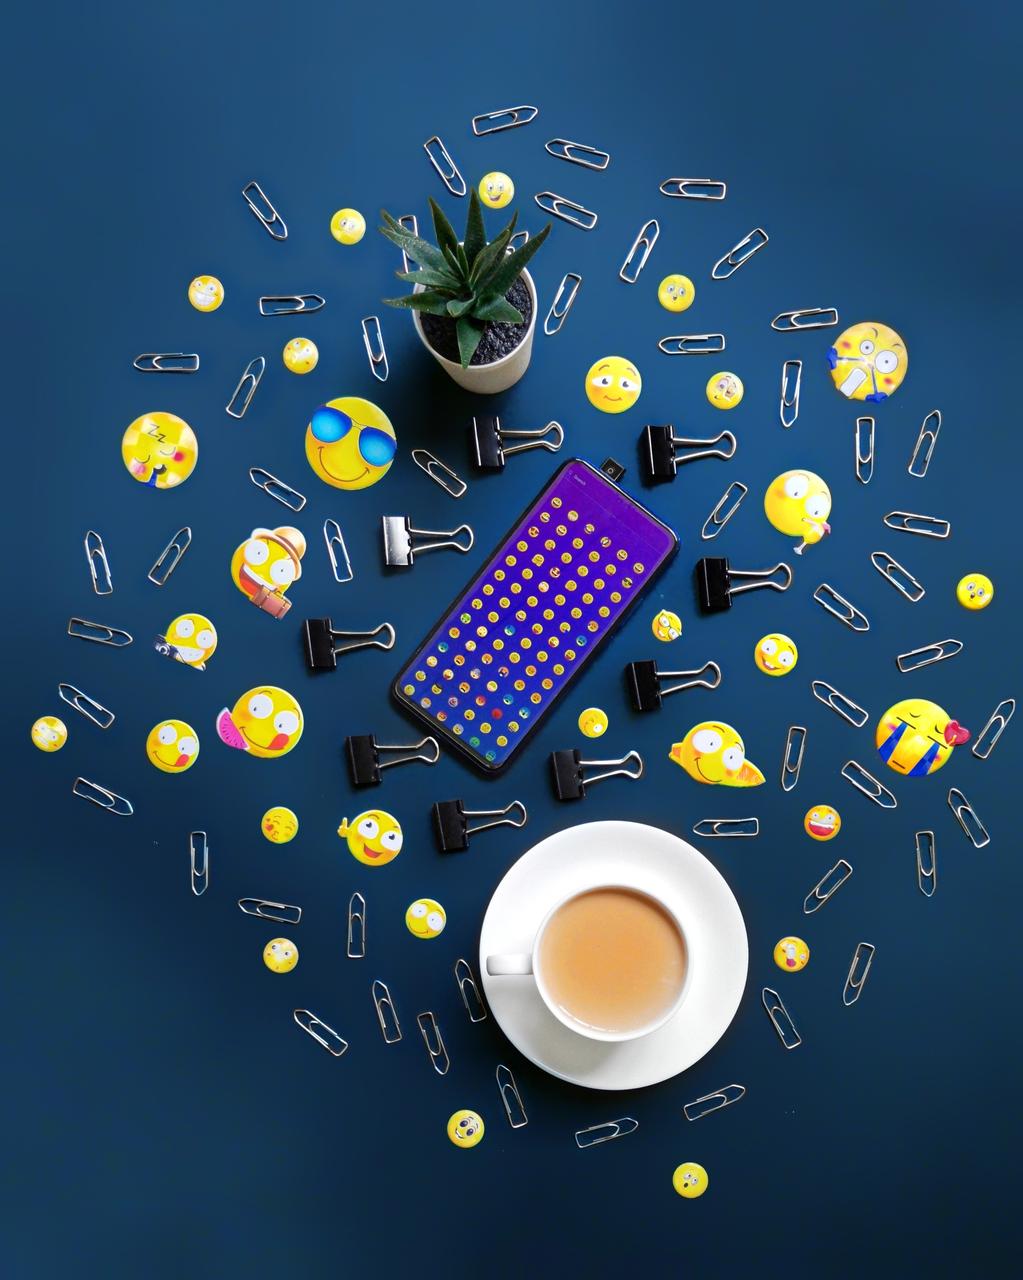 Paper clips, emoji, coffee, and a smartphone